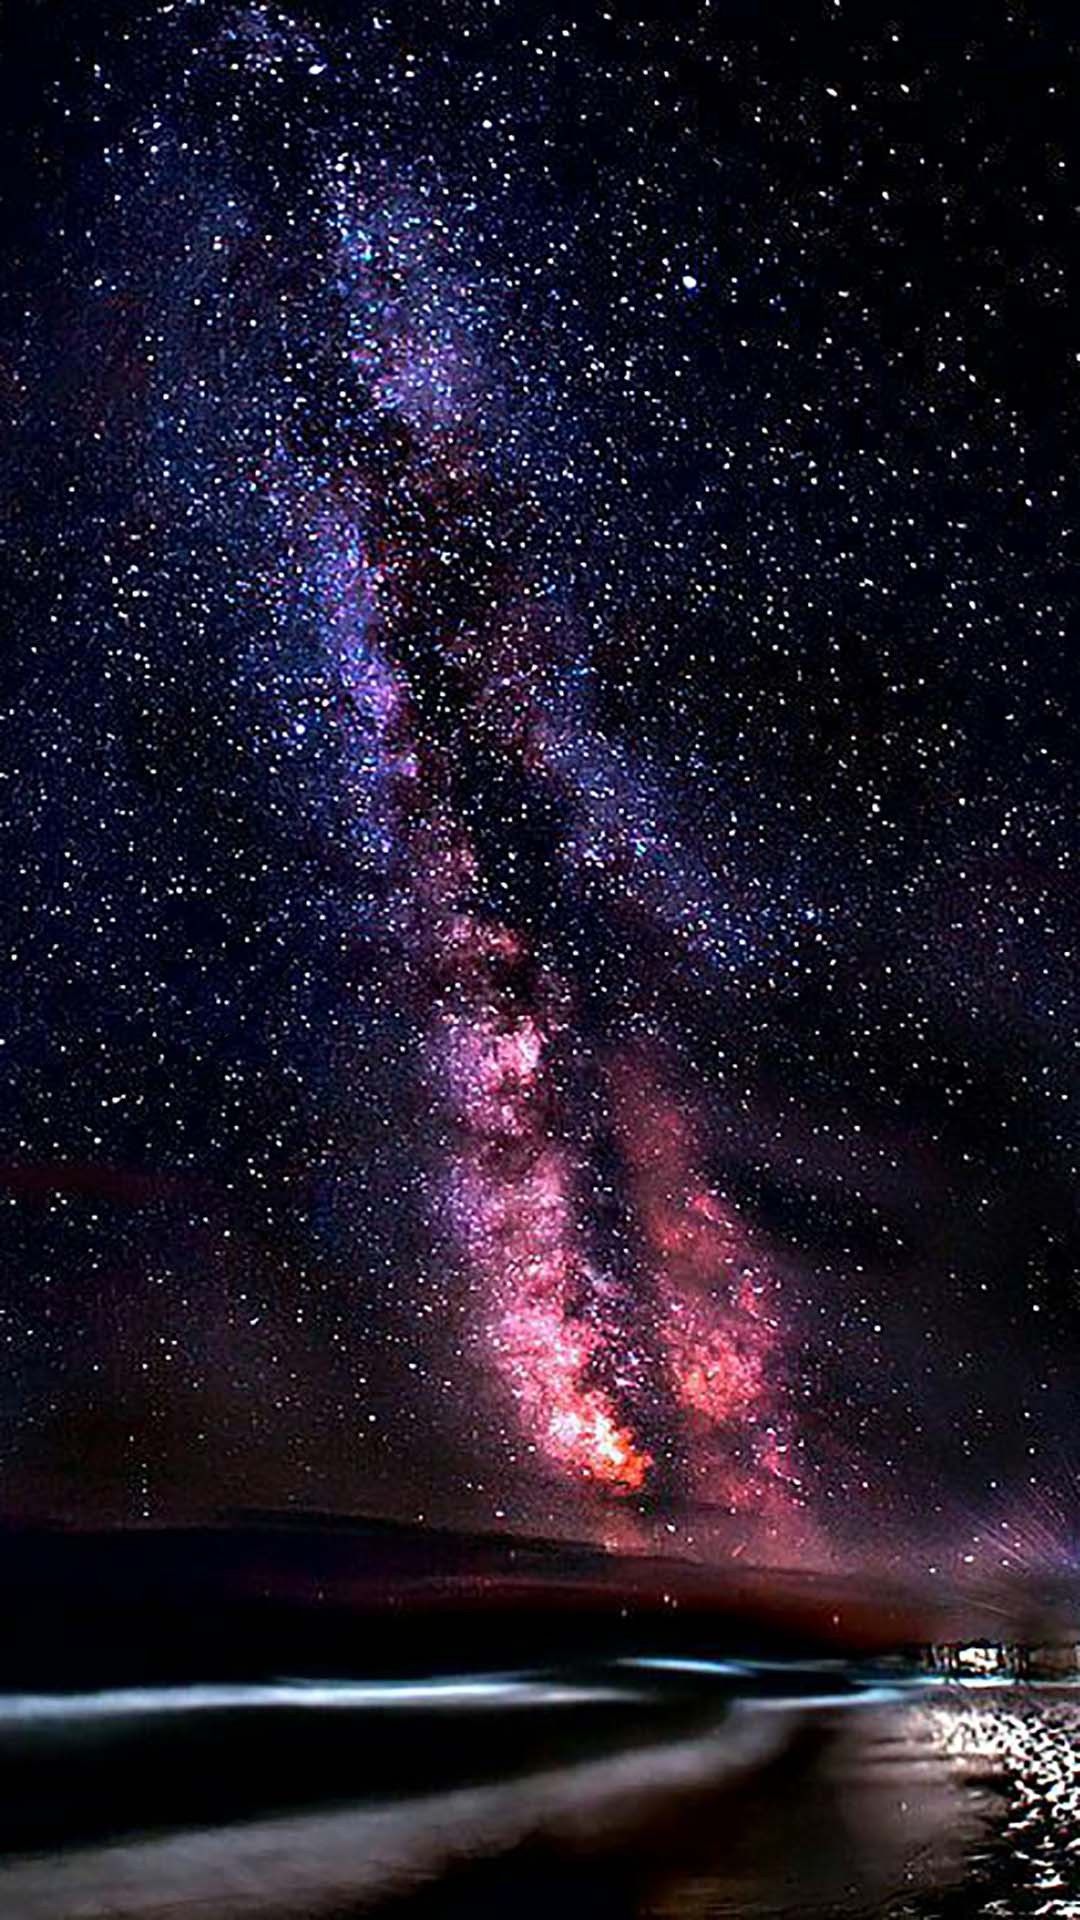 Wallpaper night sky, 5k, 4k wallpaper, stars, mountains, bridge, New  Zealand, OS #547